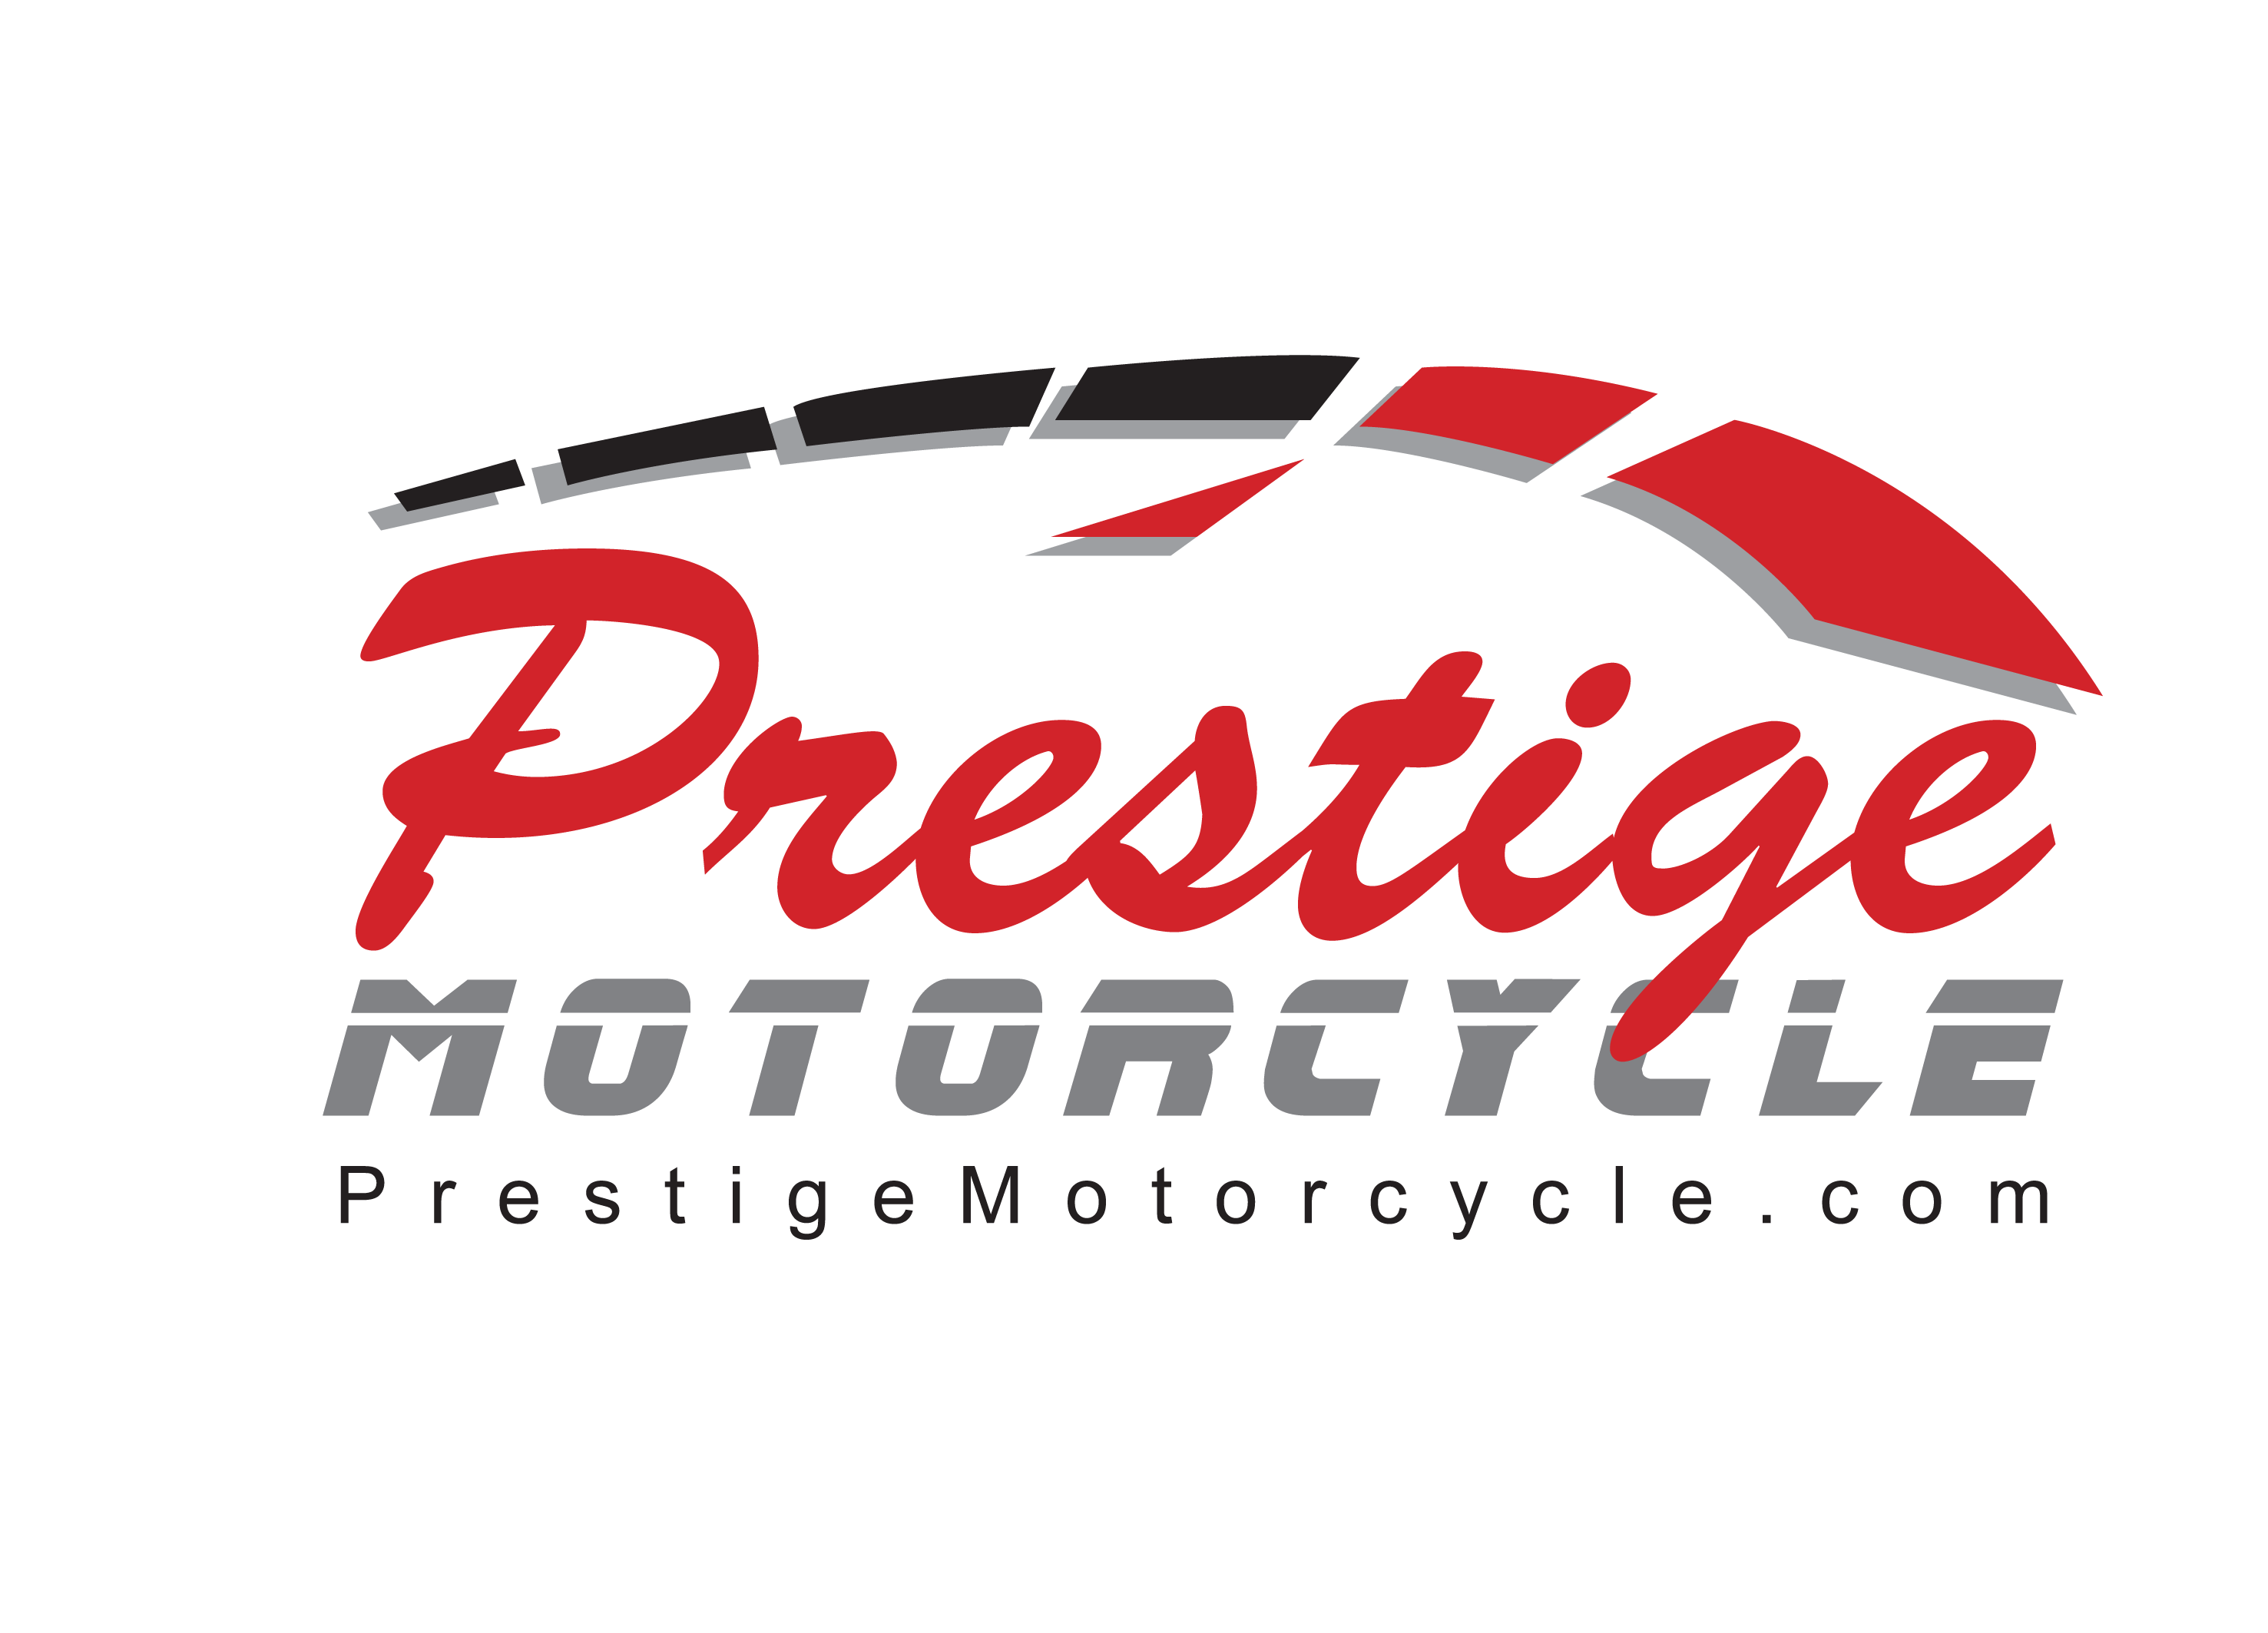 New Honda Motorcycle Logo - Prestige Motorcycle